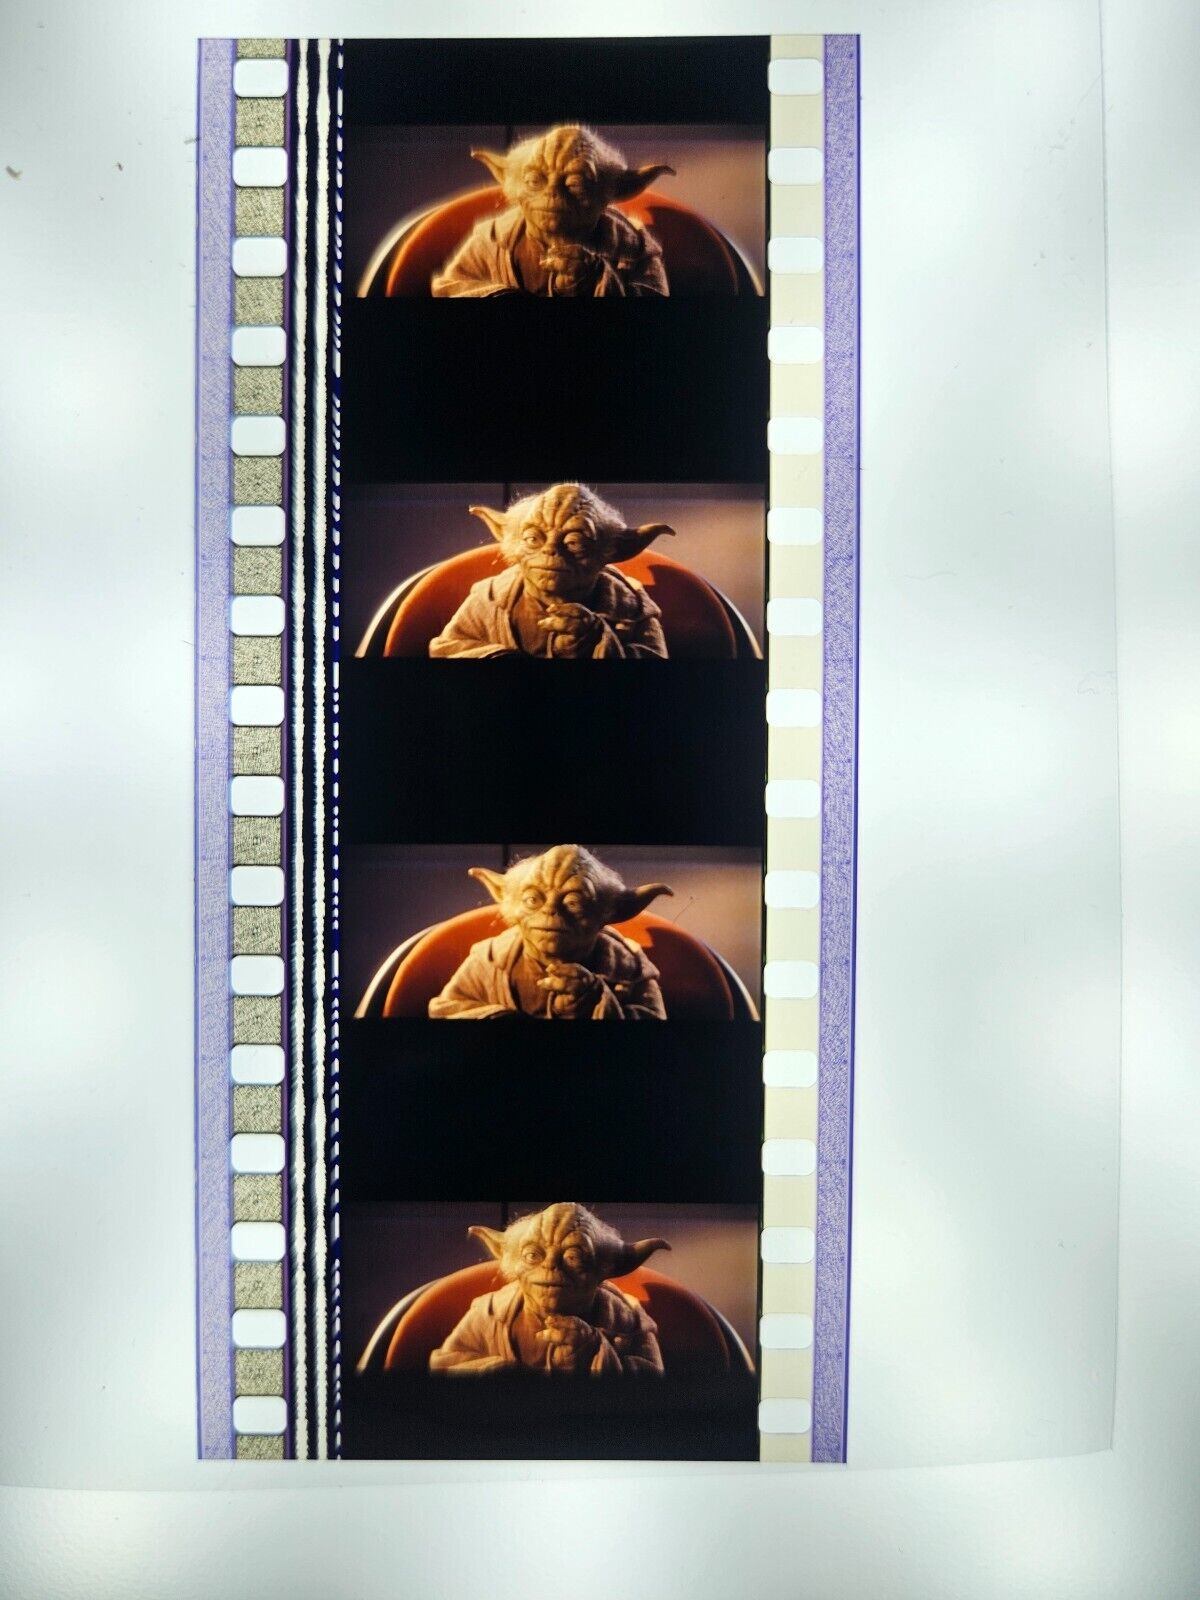 Yoda Star Wars Episode 1 Phantom Menace 35mm Original Film Cells SW2083 Star Wars 35mm Film Cell - Hobby Gems